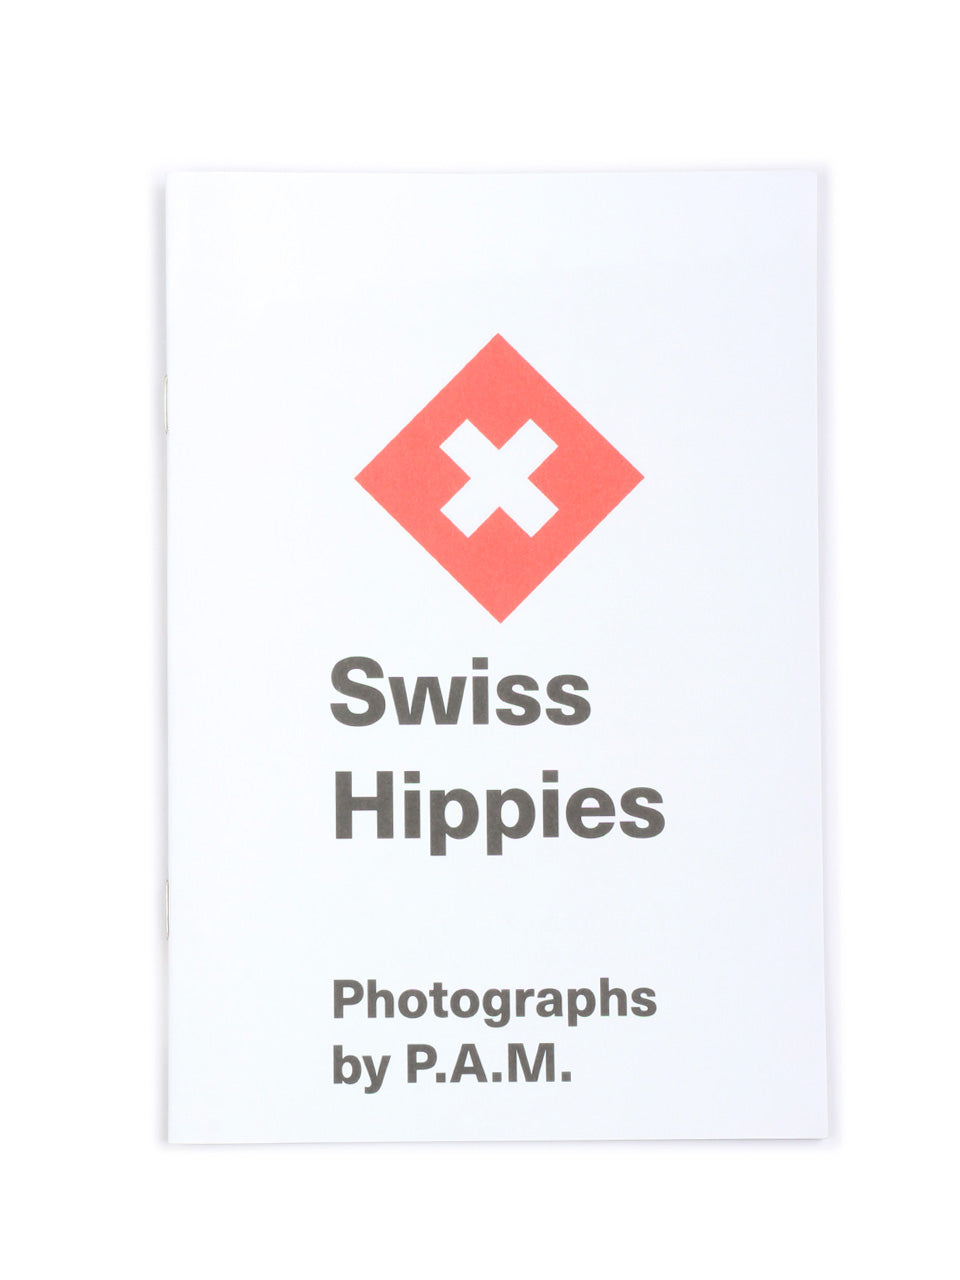 PAM/Swiss hippies